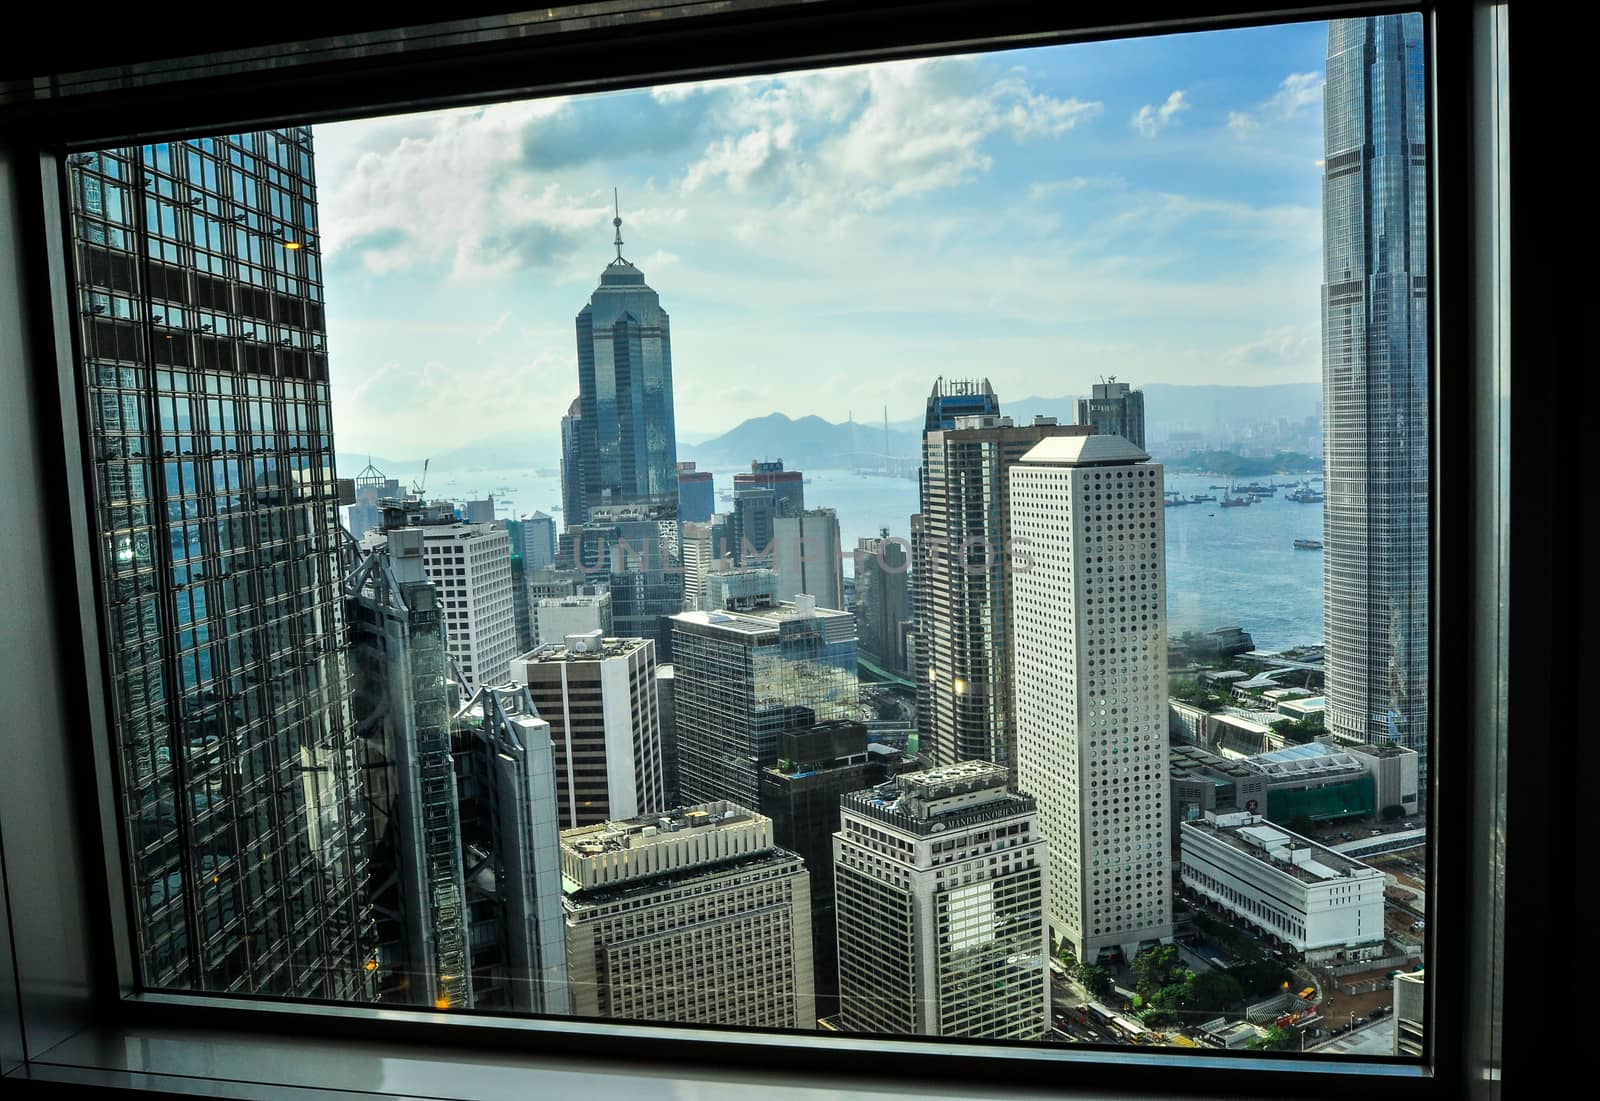 Hong Kong Bank Skysraper with blue sky by weltreisendertj